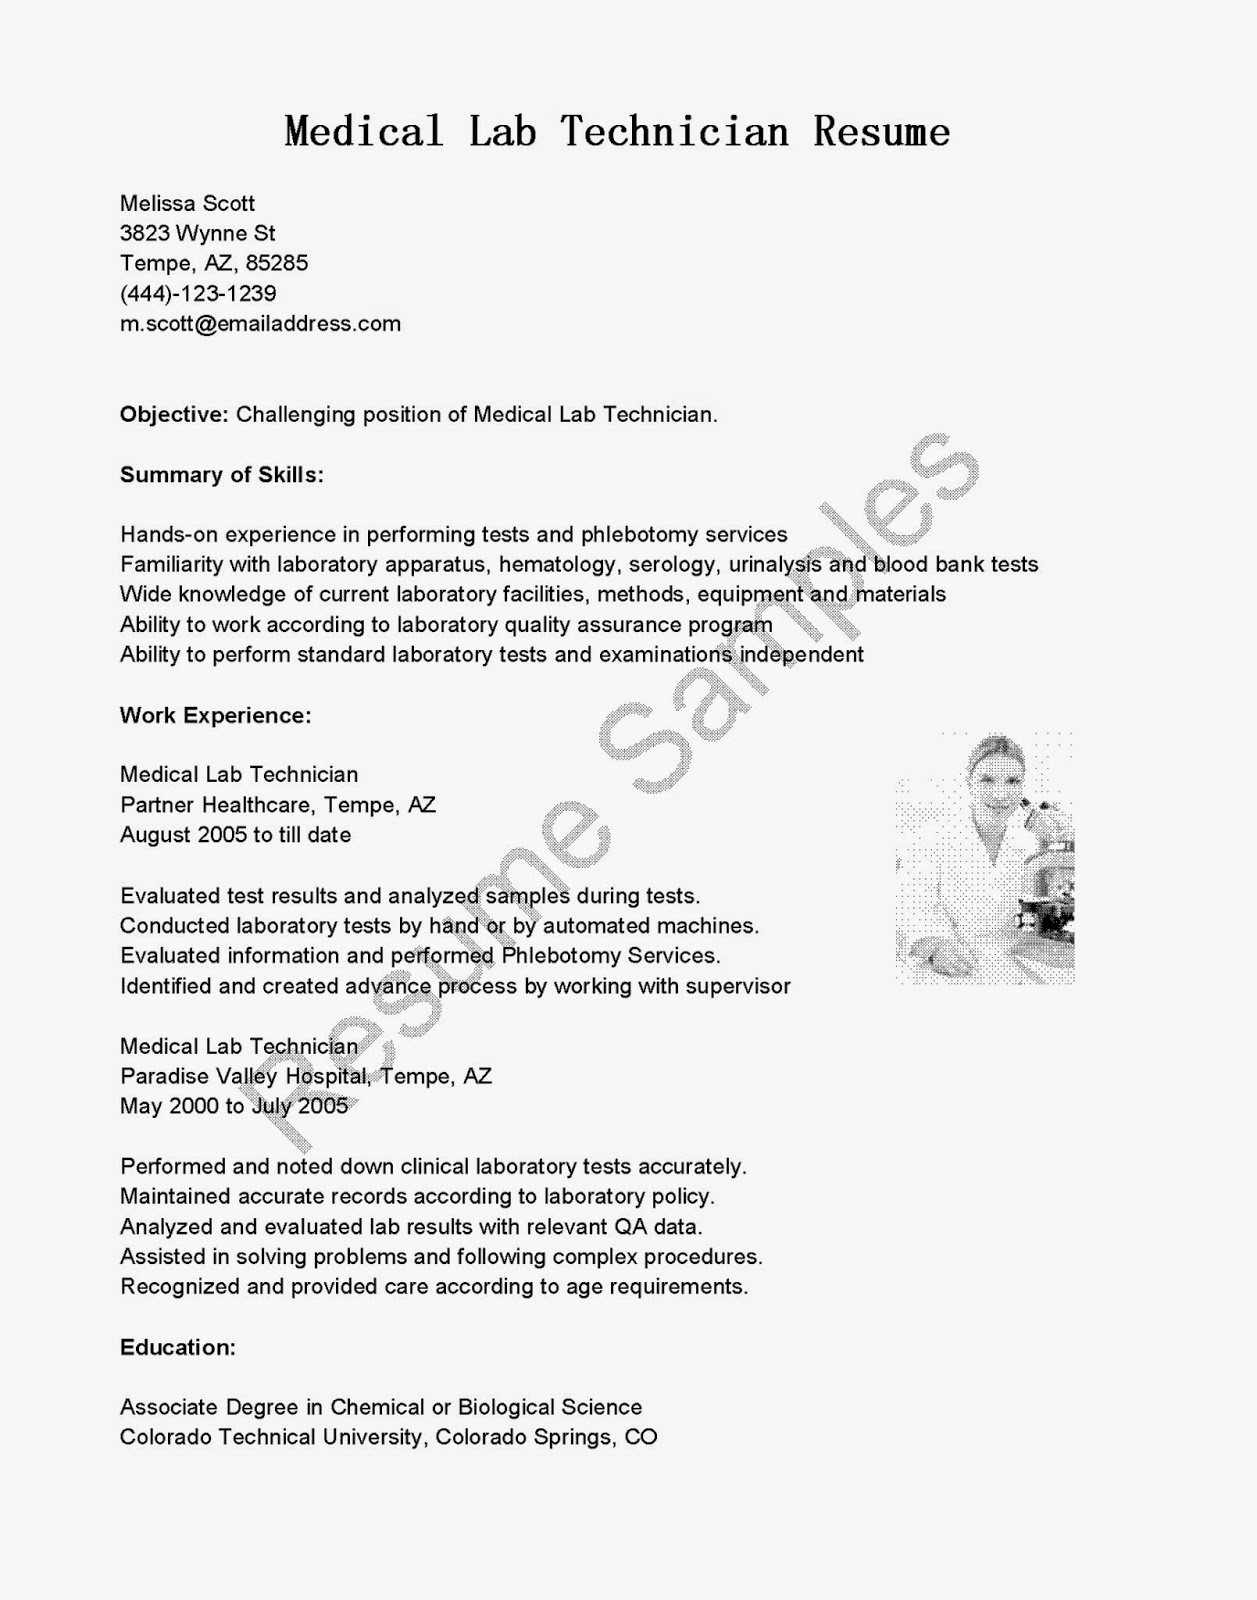 Dialysis biomedical technician resume